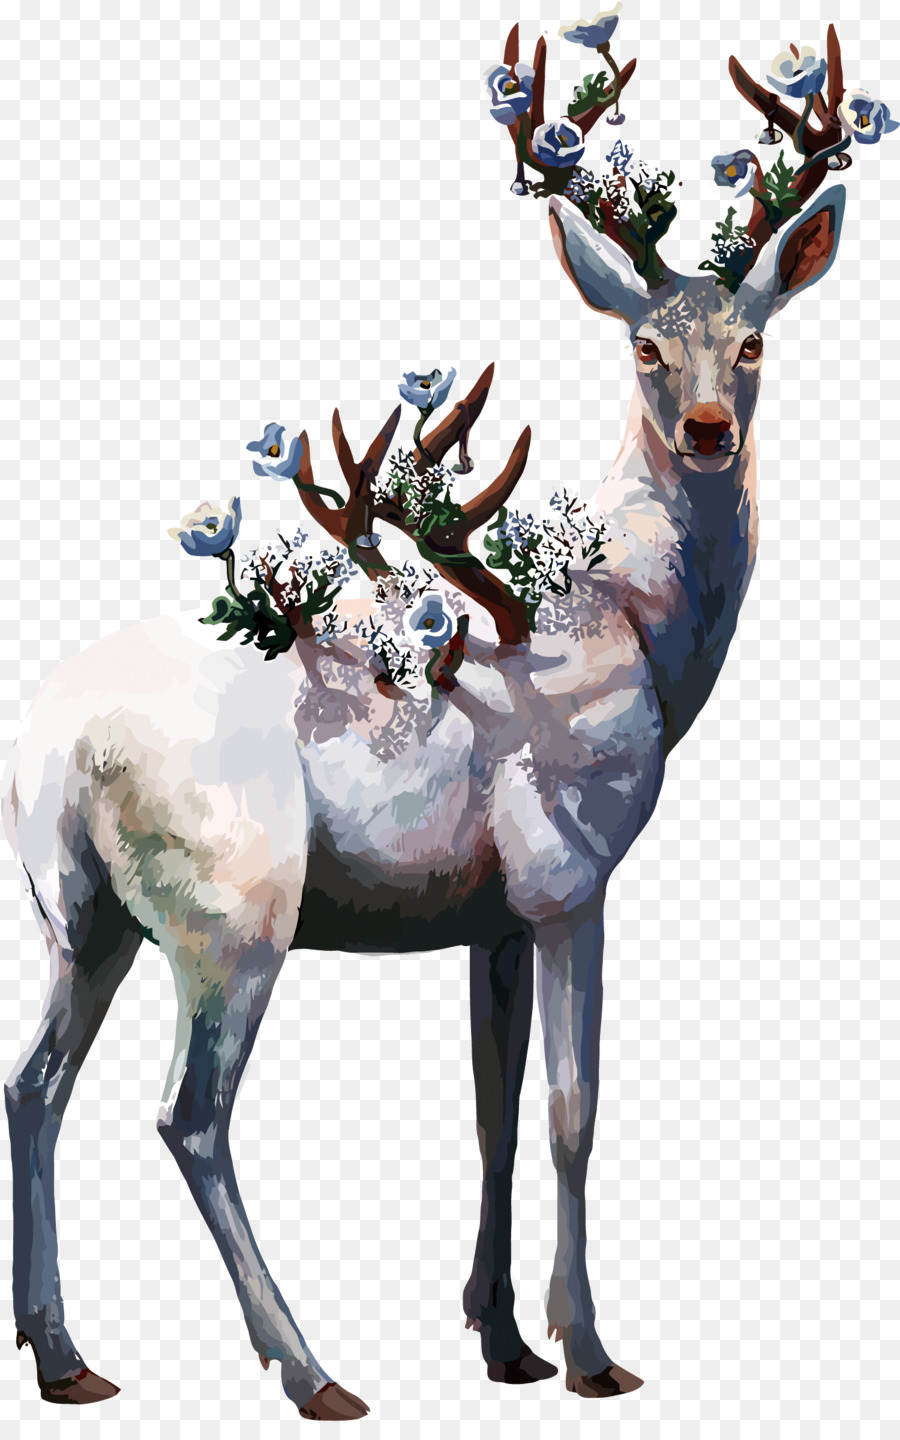 Deer Oil painting Poster - Vector oil painting deer png download - 1500*2372 - Free Transparent Deer png Download.